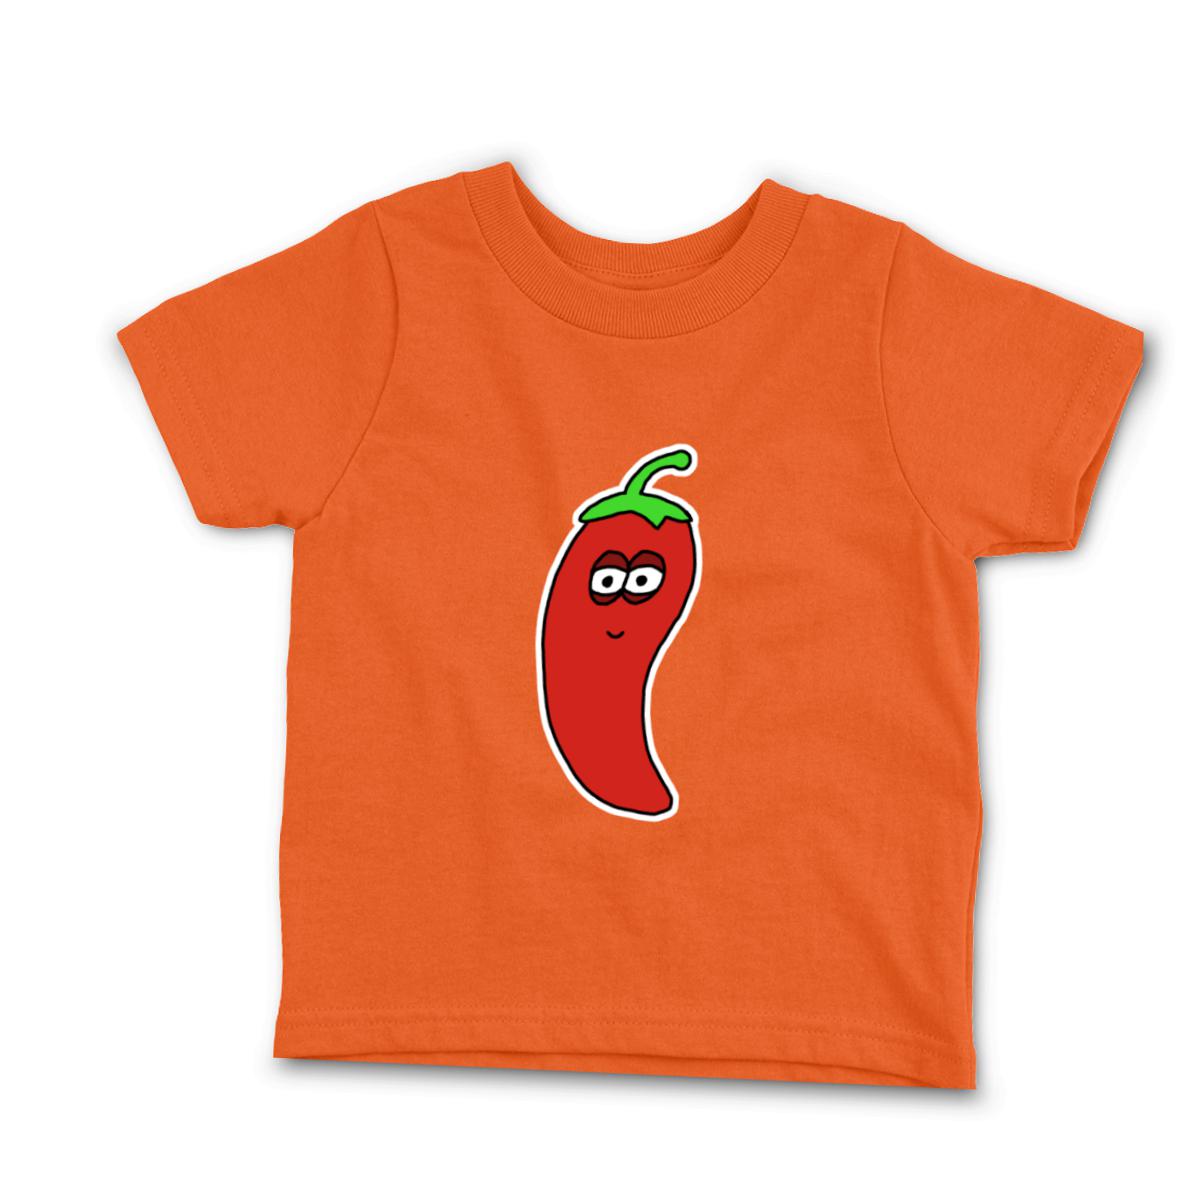 Chili Pepper Toddler Tee 56T orange